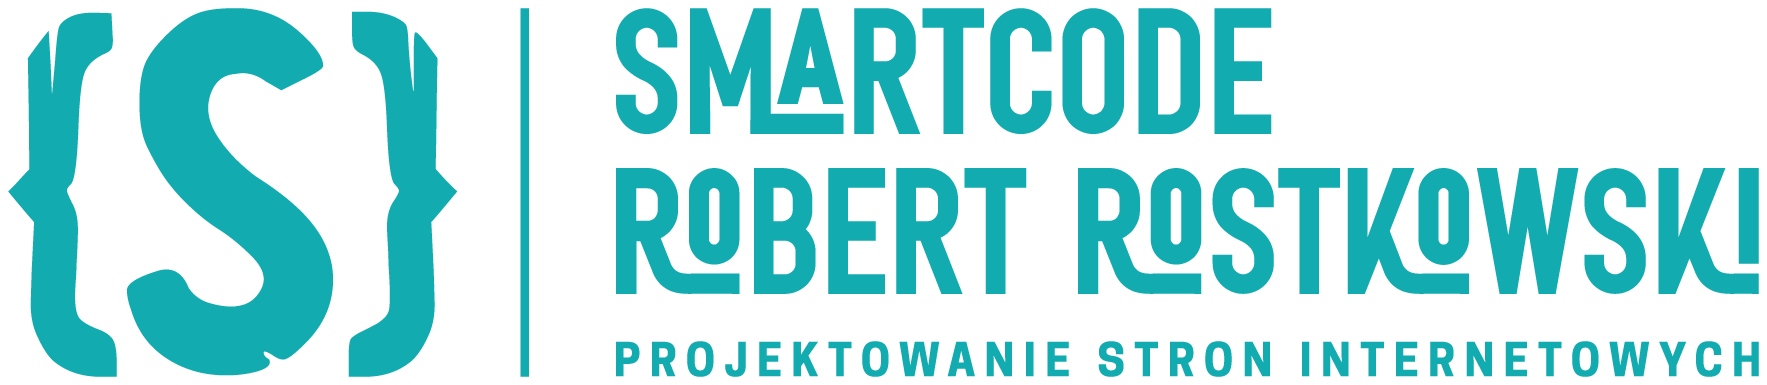 SMARTCODE Robert Rostkowski 